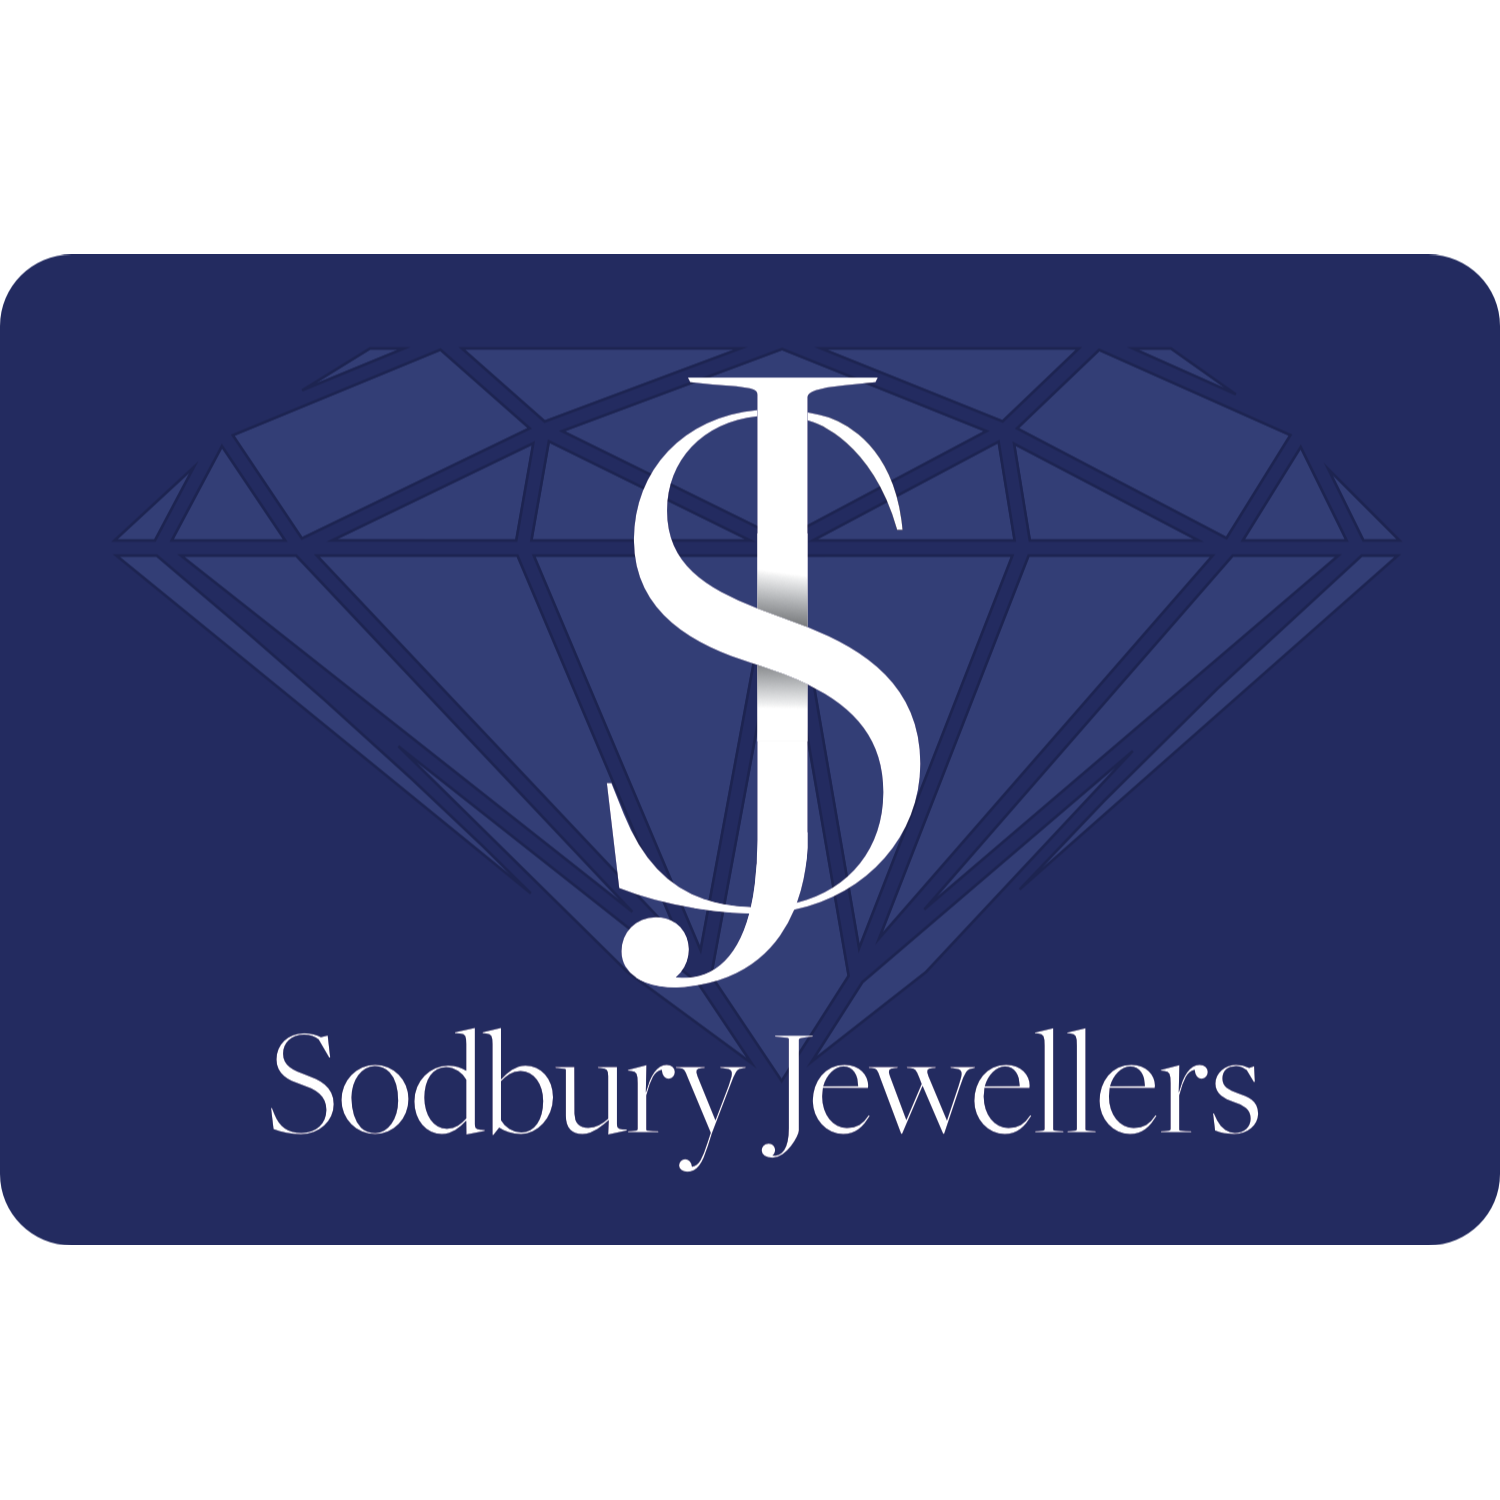 Sodbury Jewellers logo